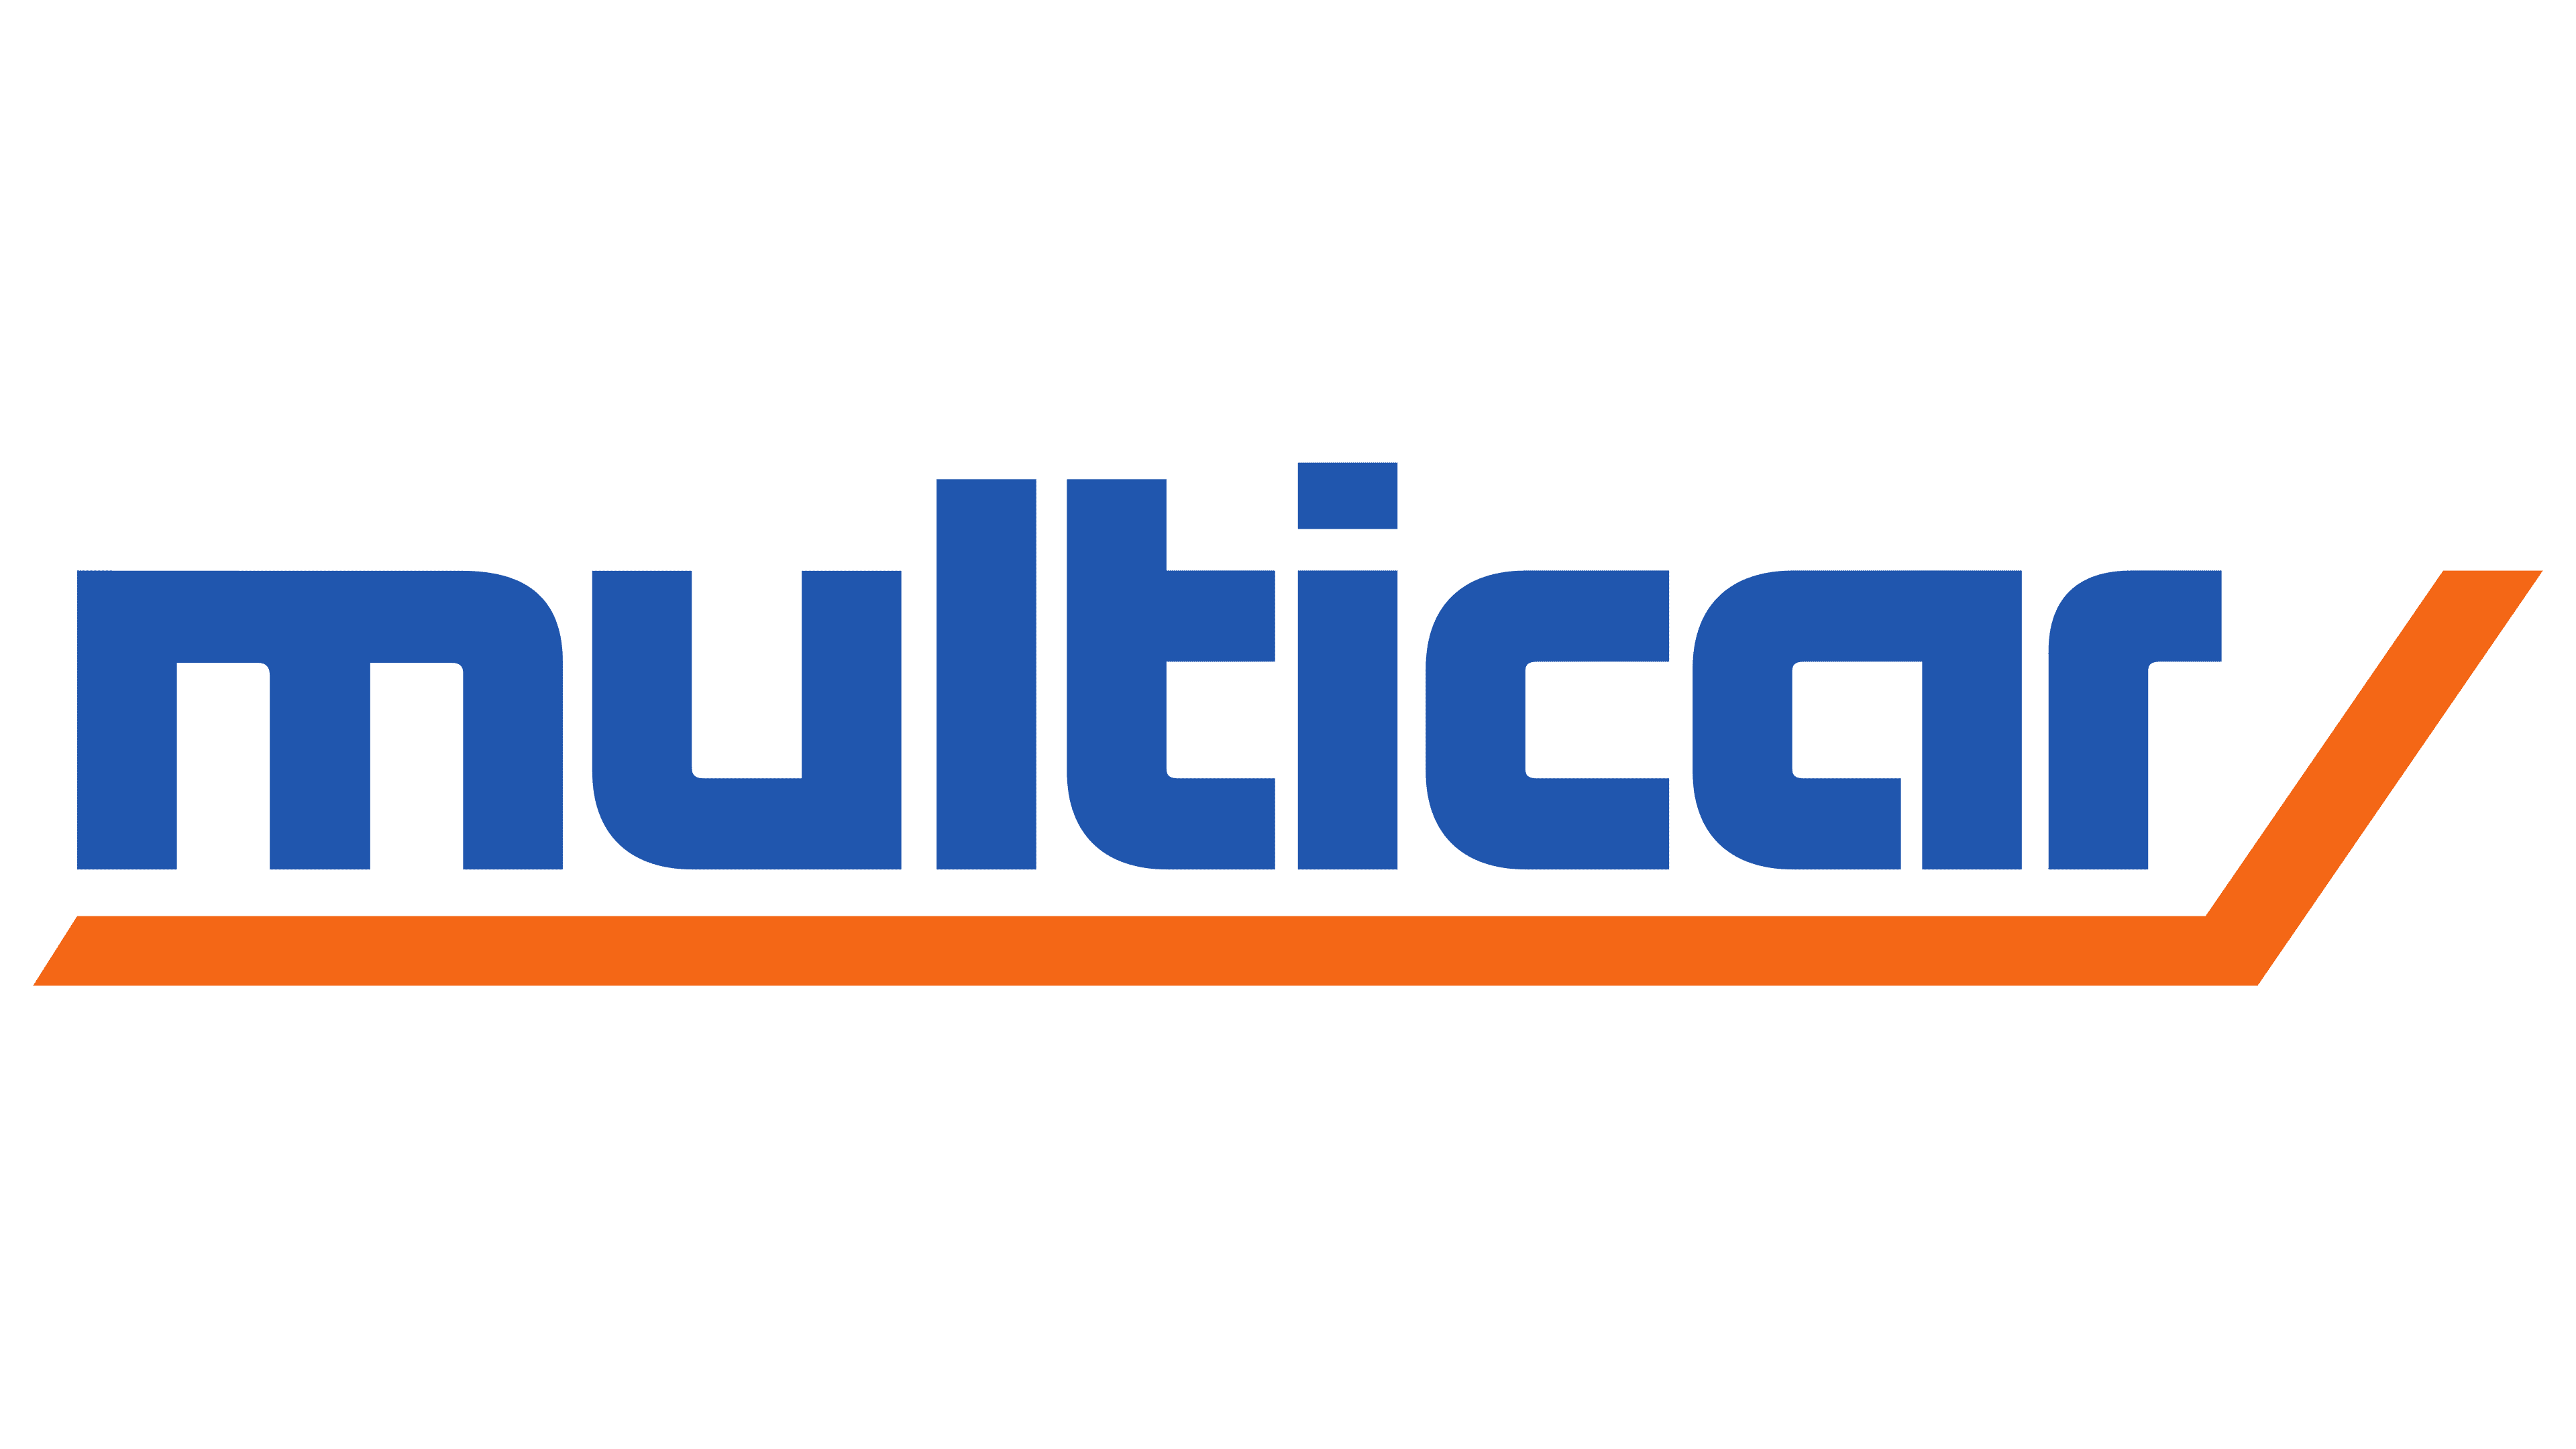 Multicar Logo